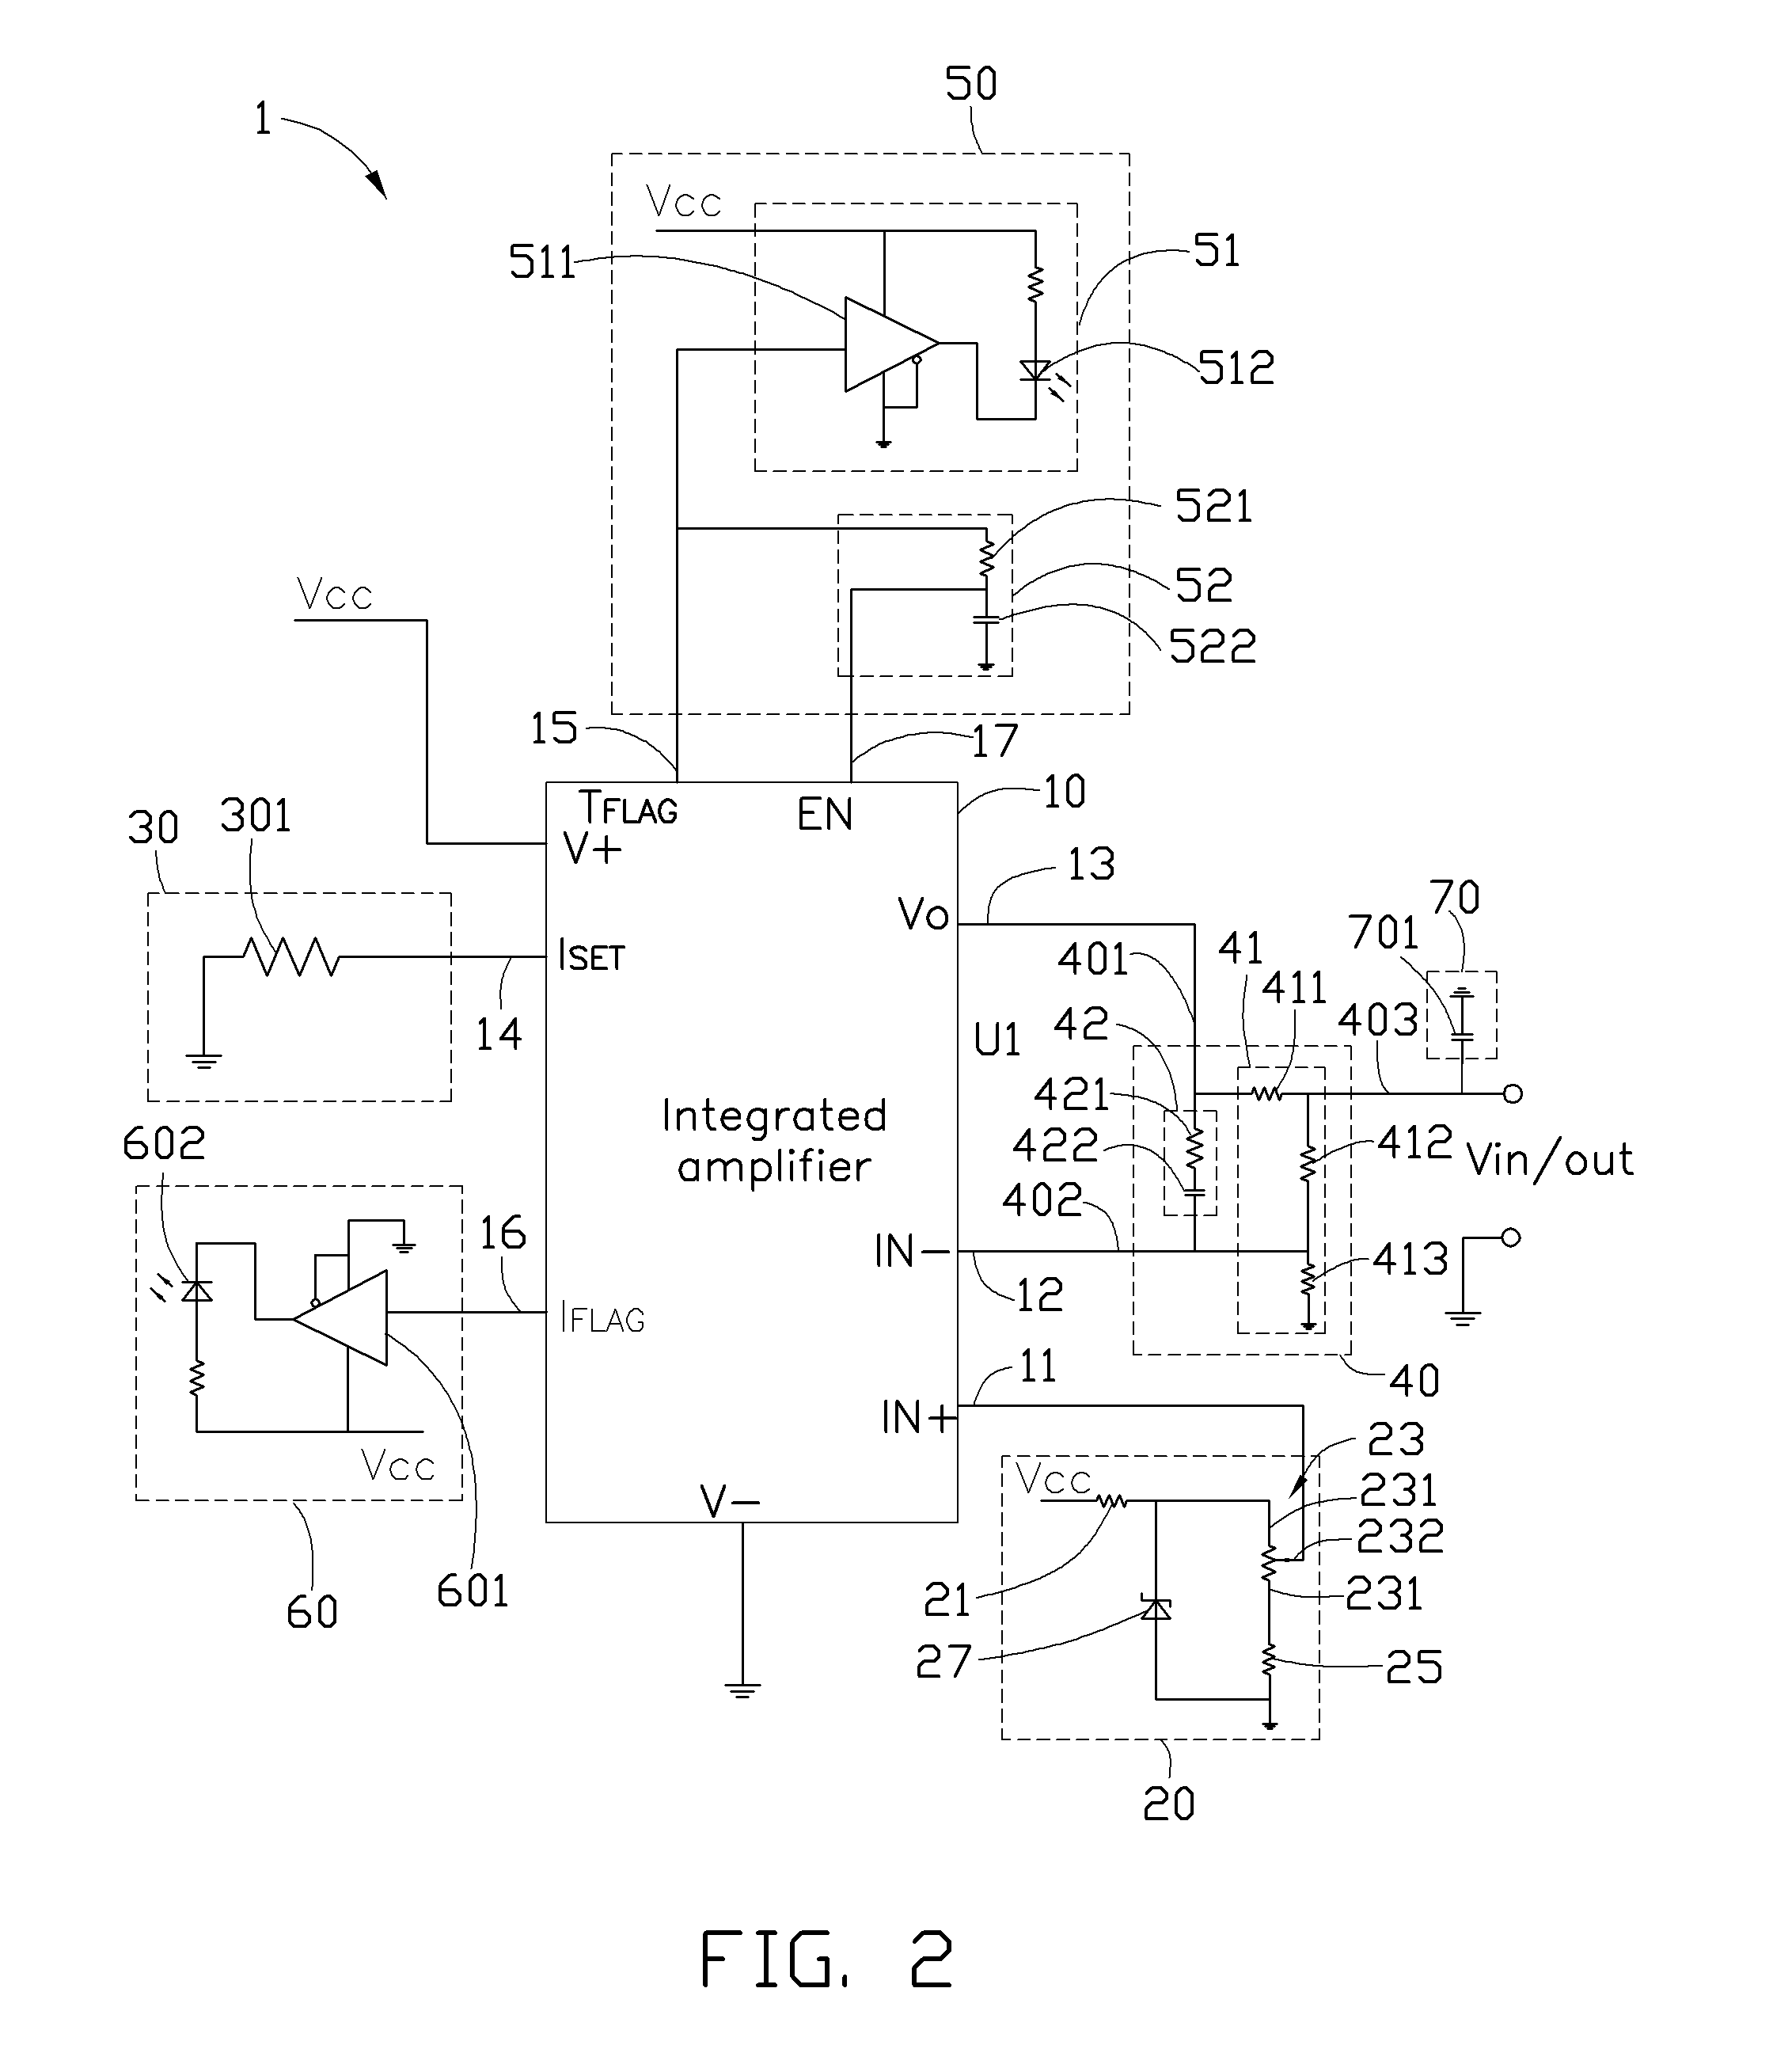 Battery simulation circuit